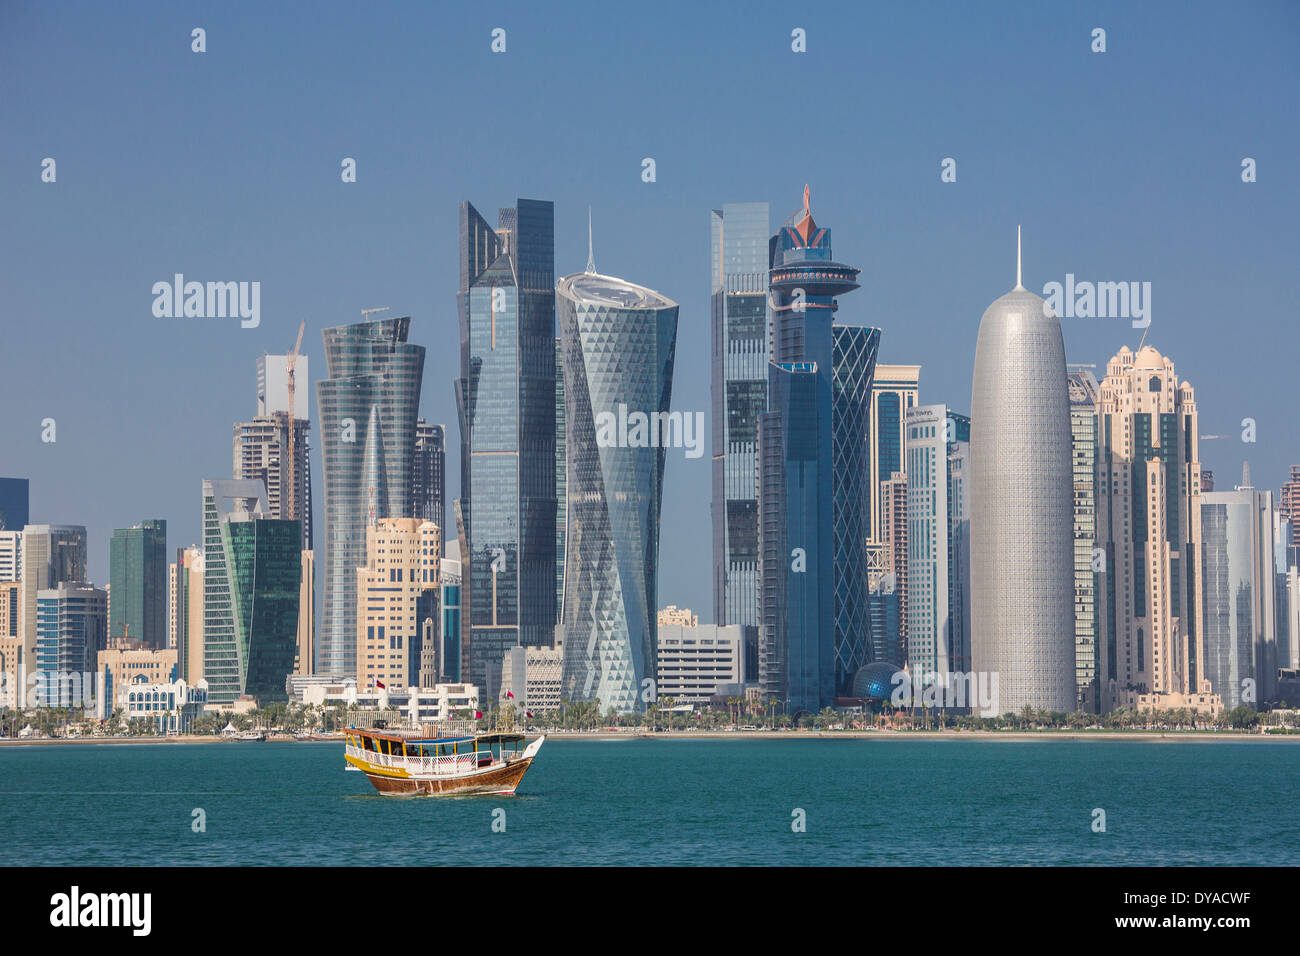 Al Bidda Burj Doha Katar Nahost World Trade Center Architektur Bucht Boot Stadt bunte Corniche futuristische Skyline Himmel Stockfoto